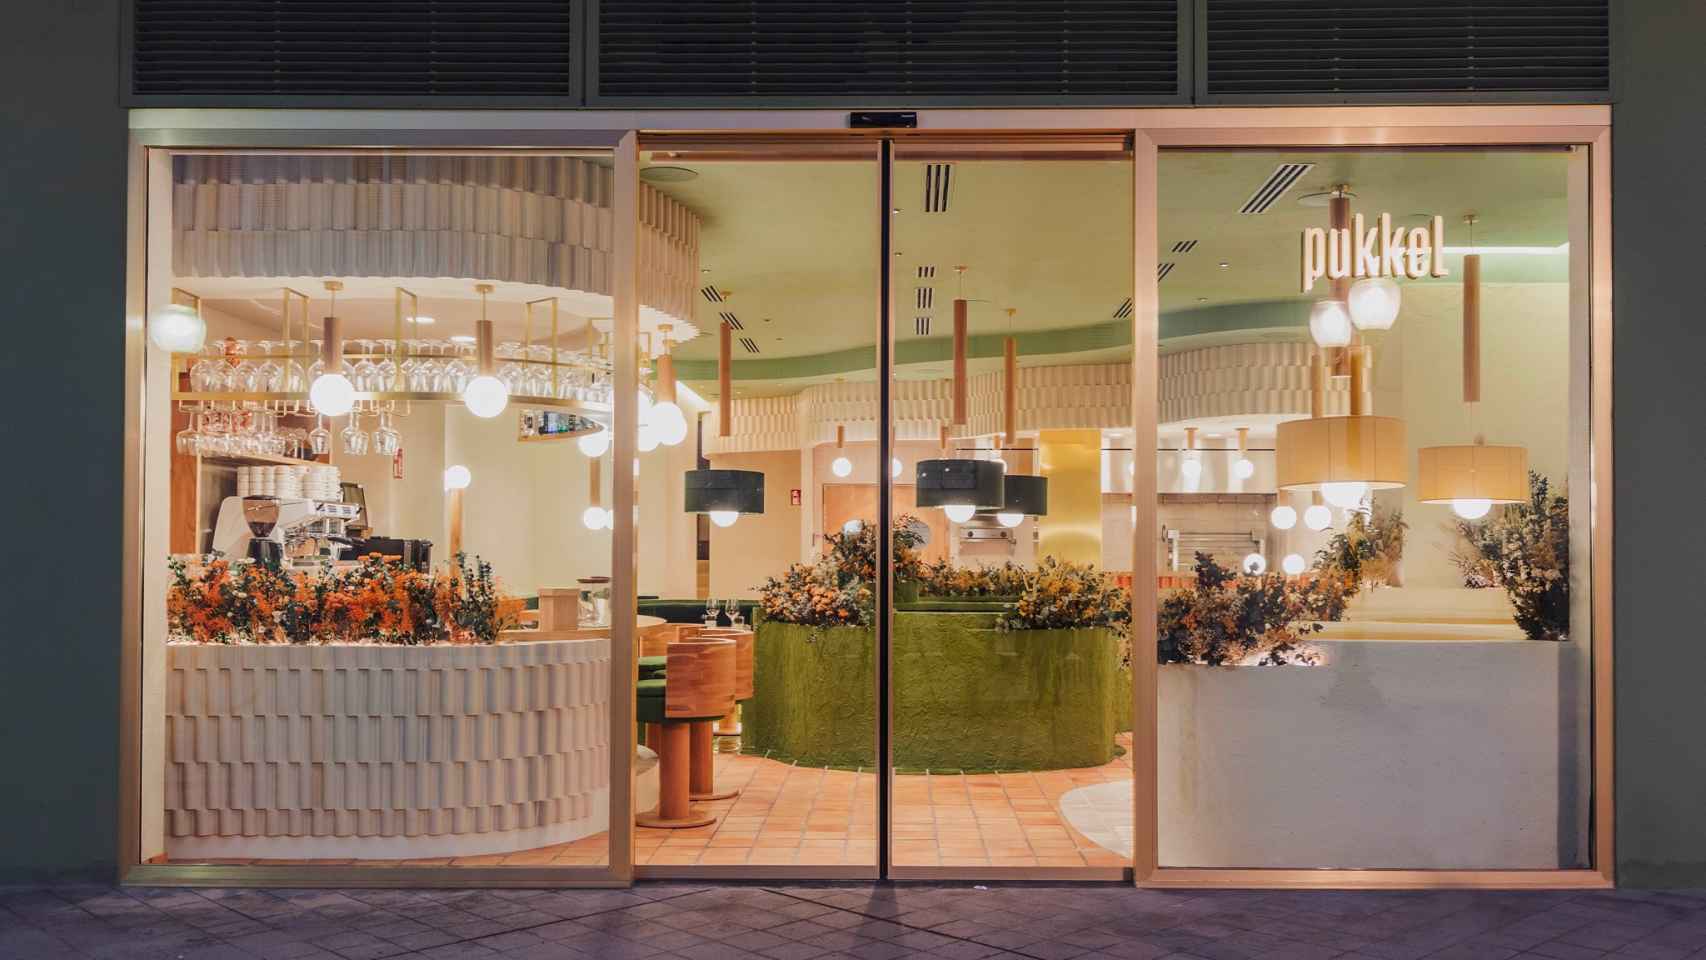 Aspecto exterior e interior de 'Pukkel', restaurante ubicado en el centro de Huesca.